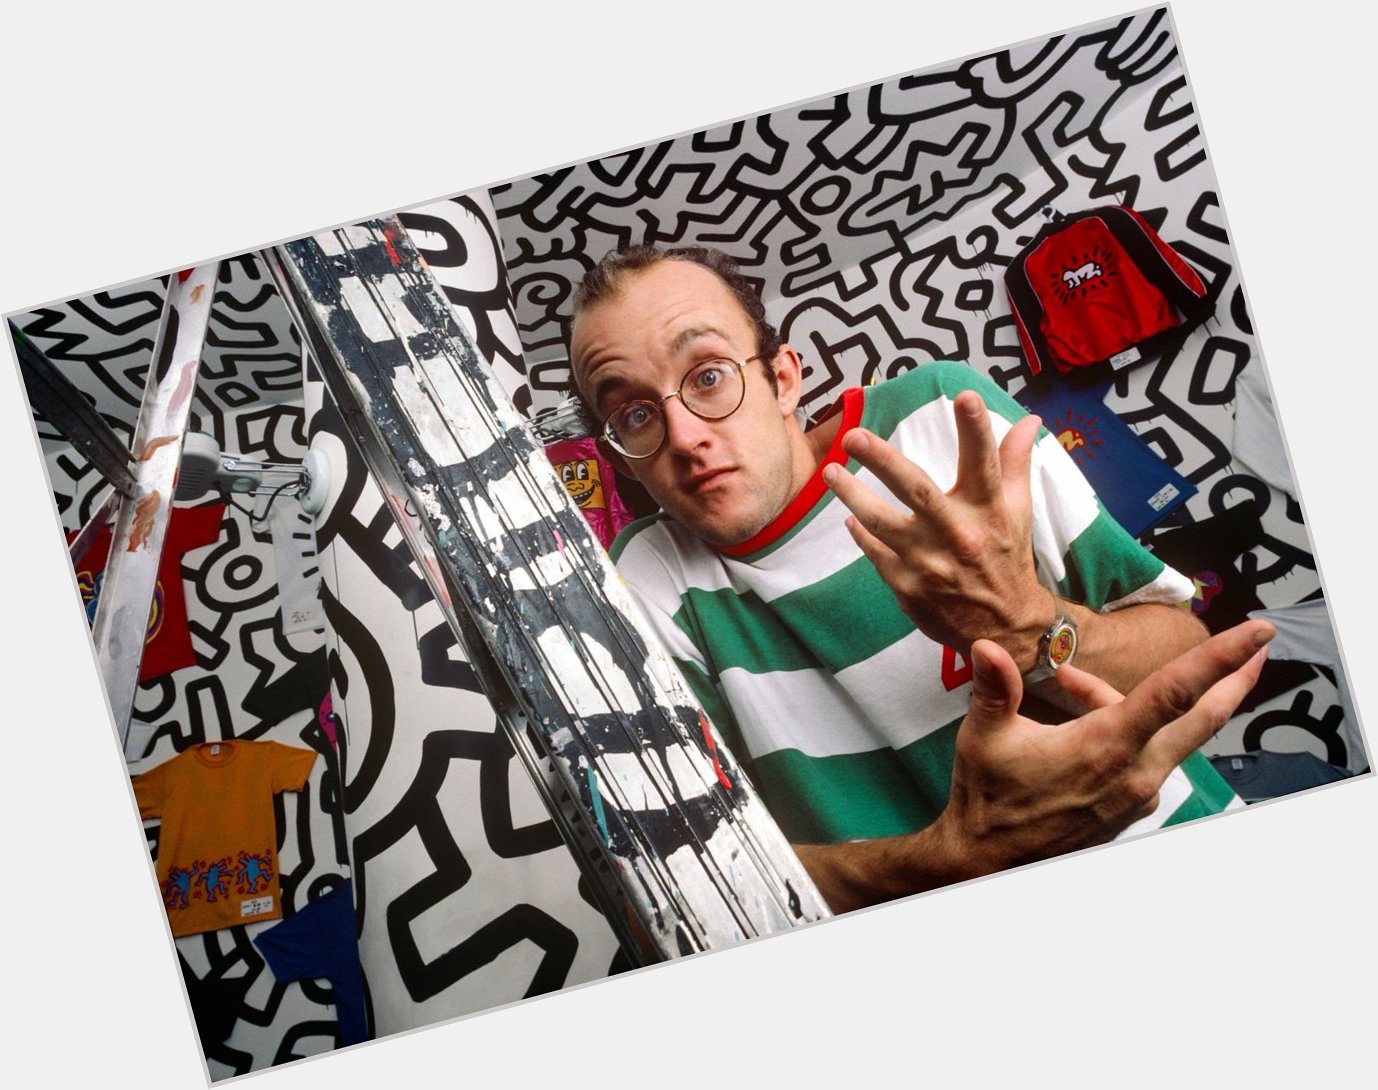 Happy bday Keith Haring! 